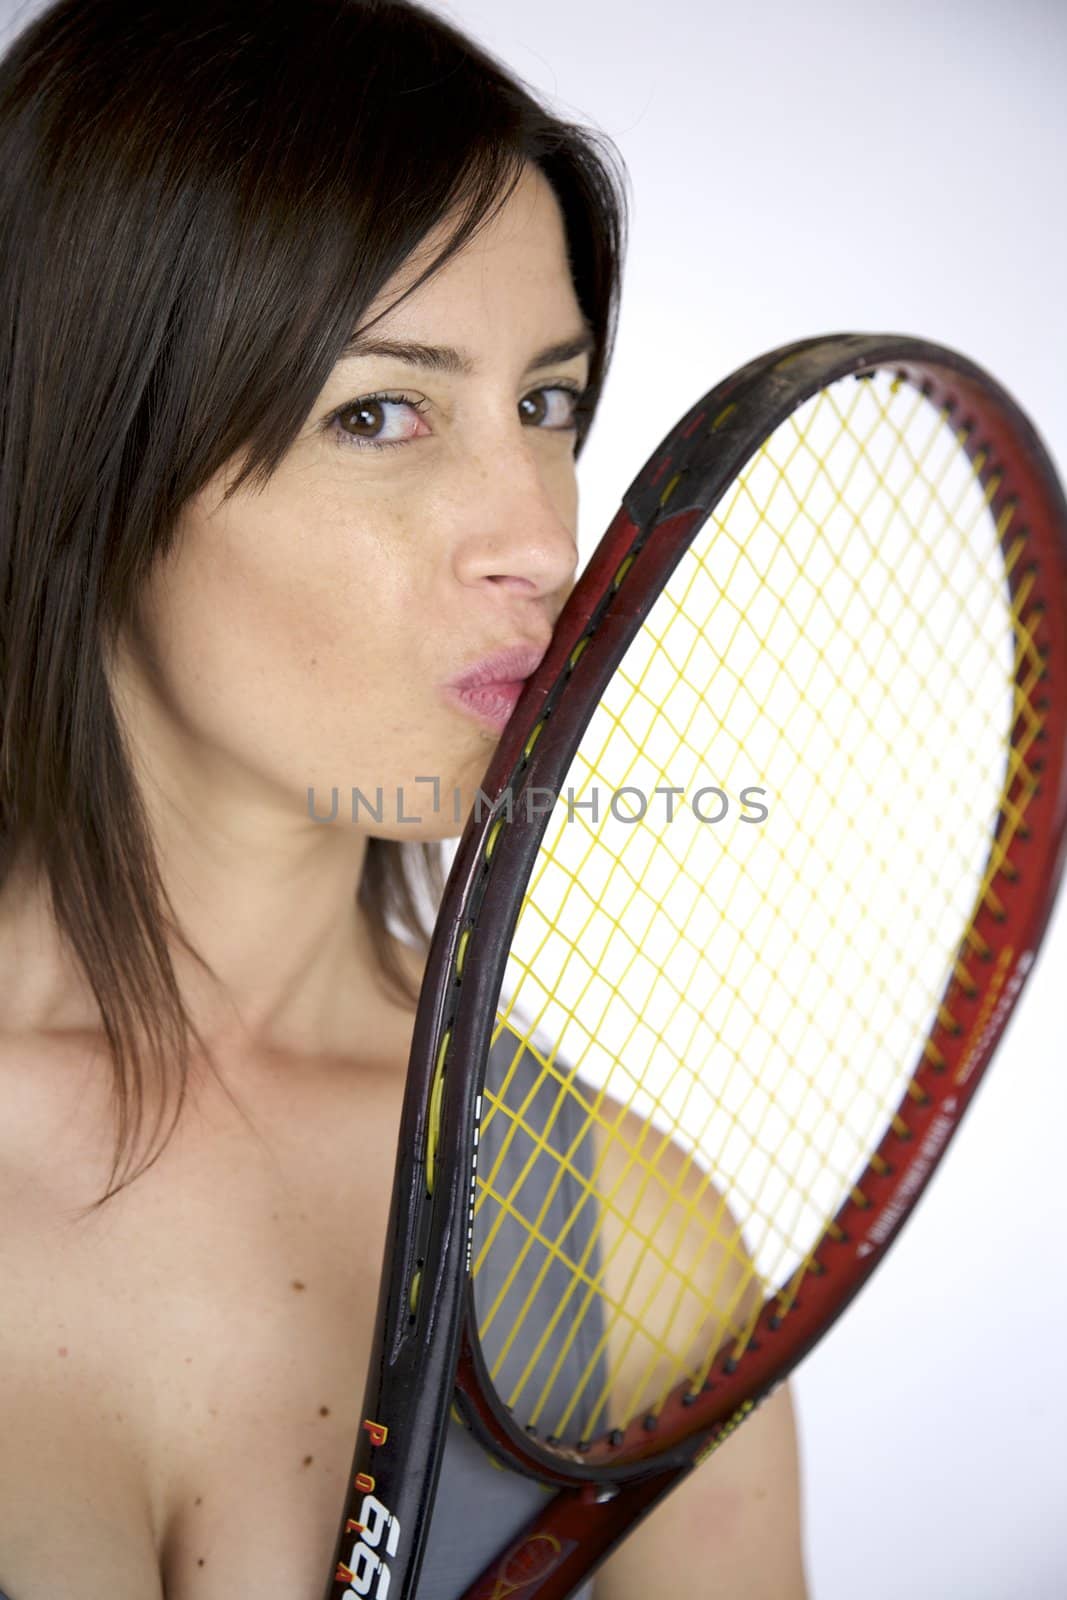 Beautiful tennis player by fmarsicano